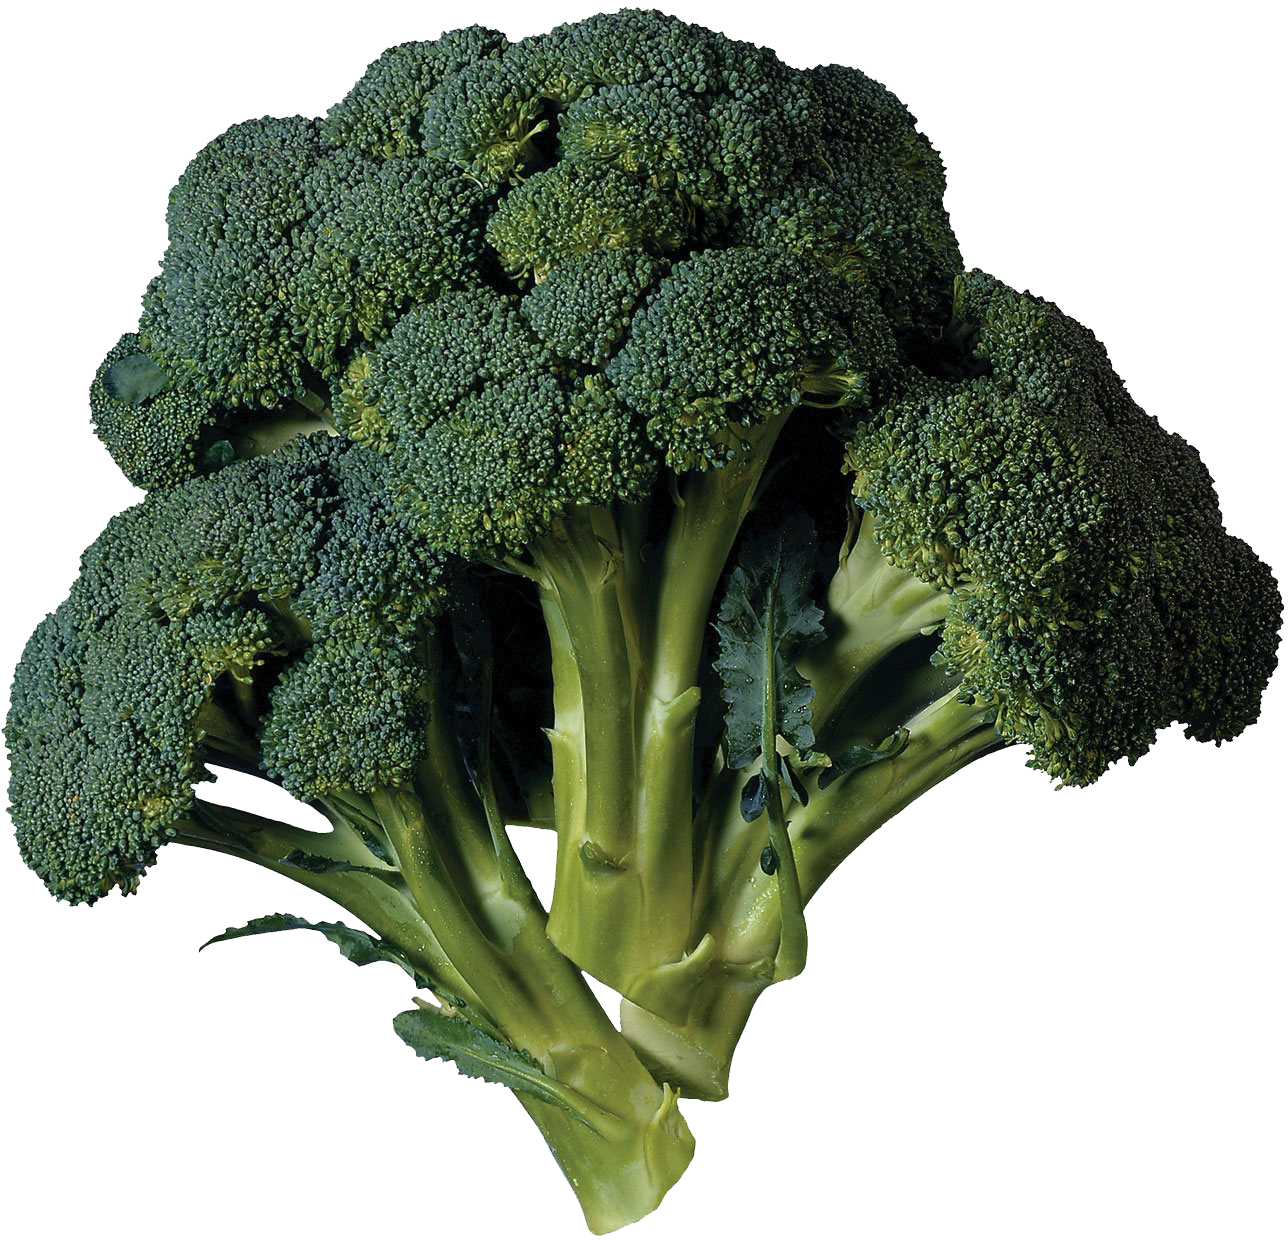 Green broccoli PNG Transparent Image